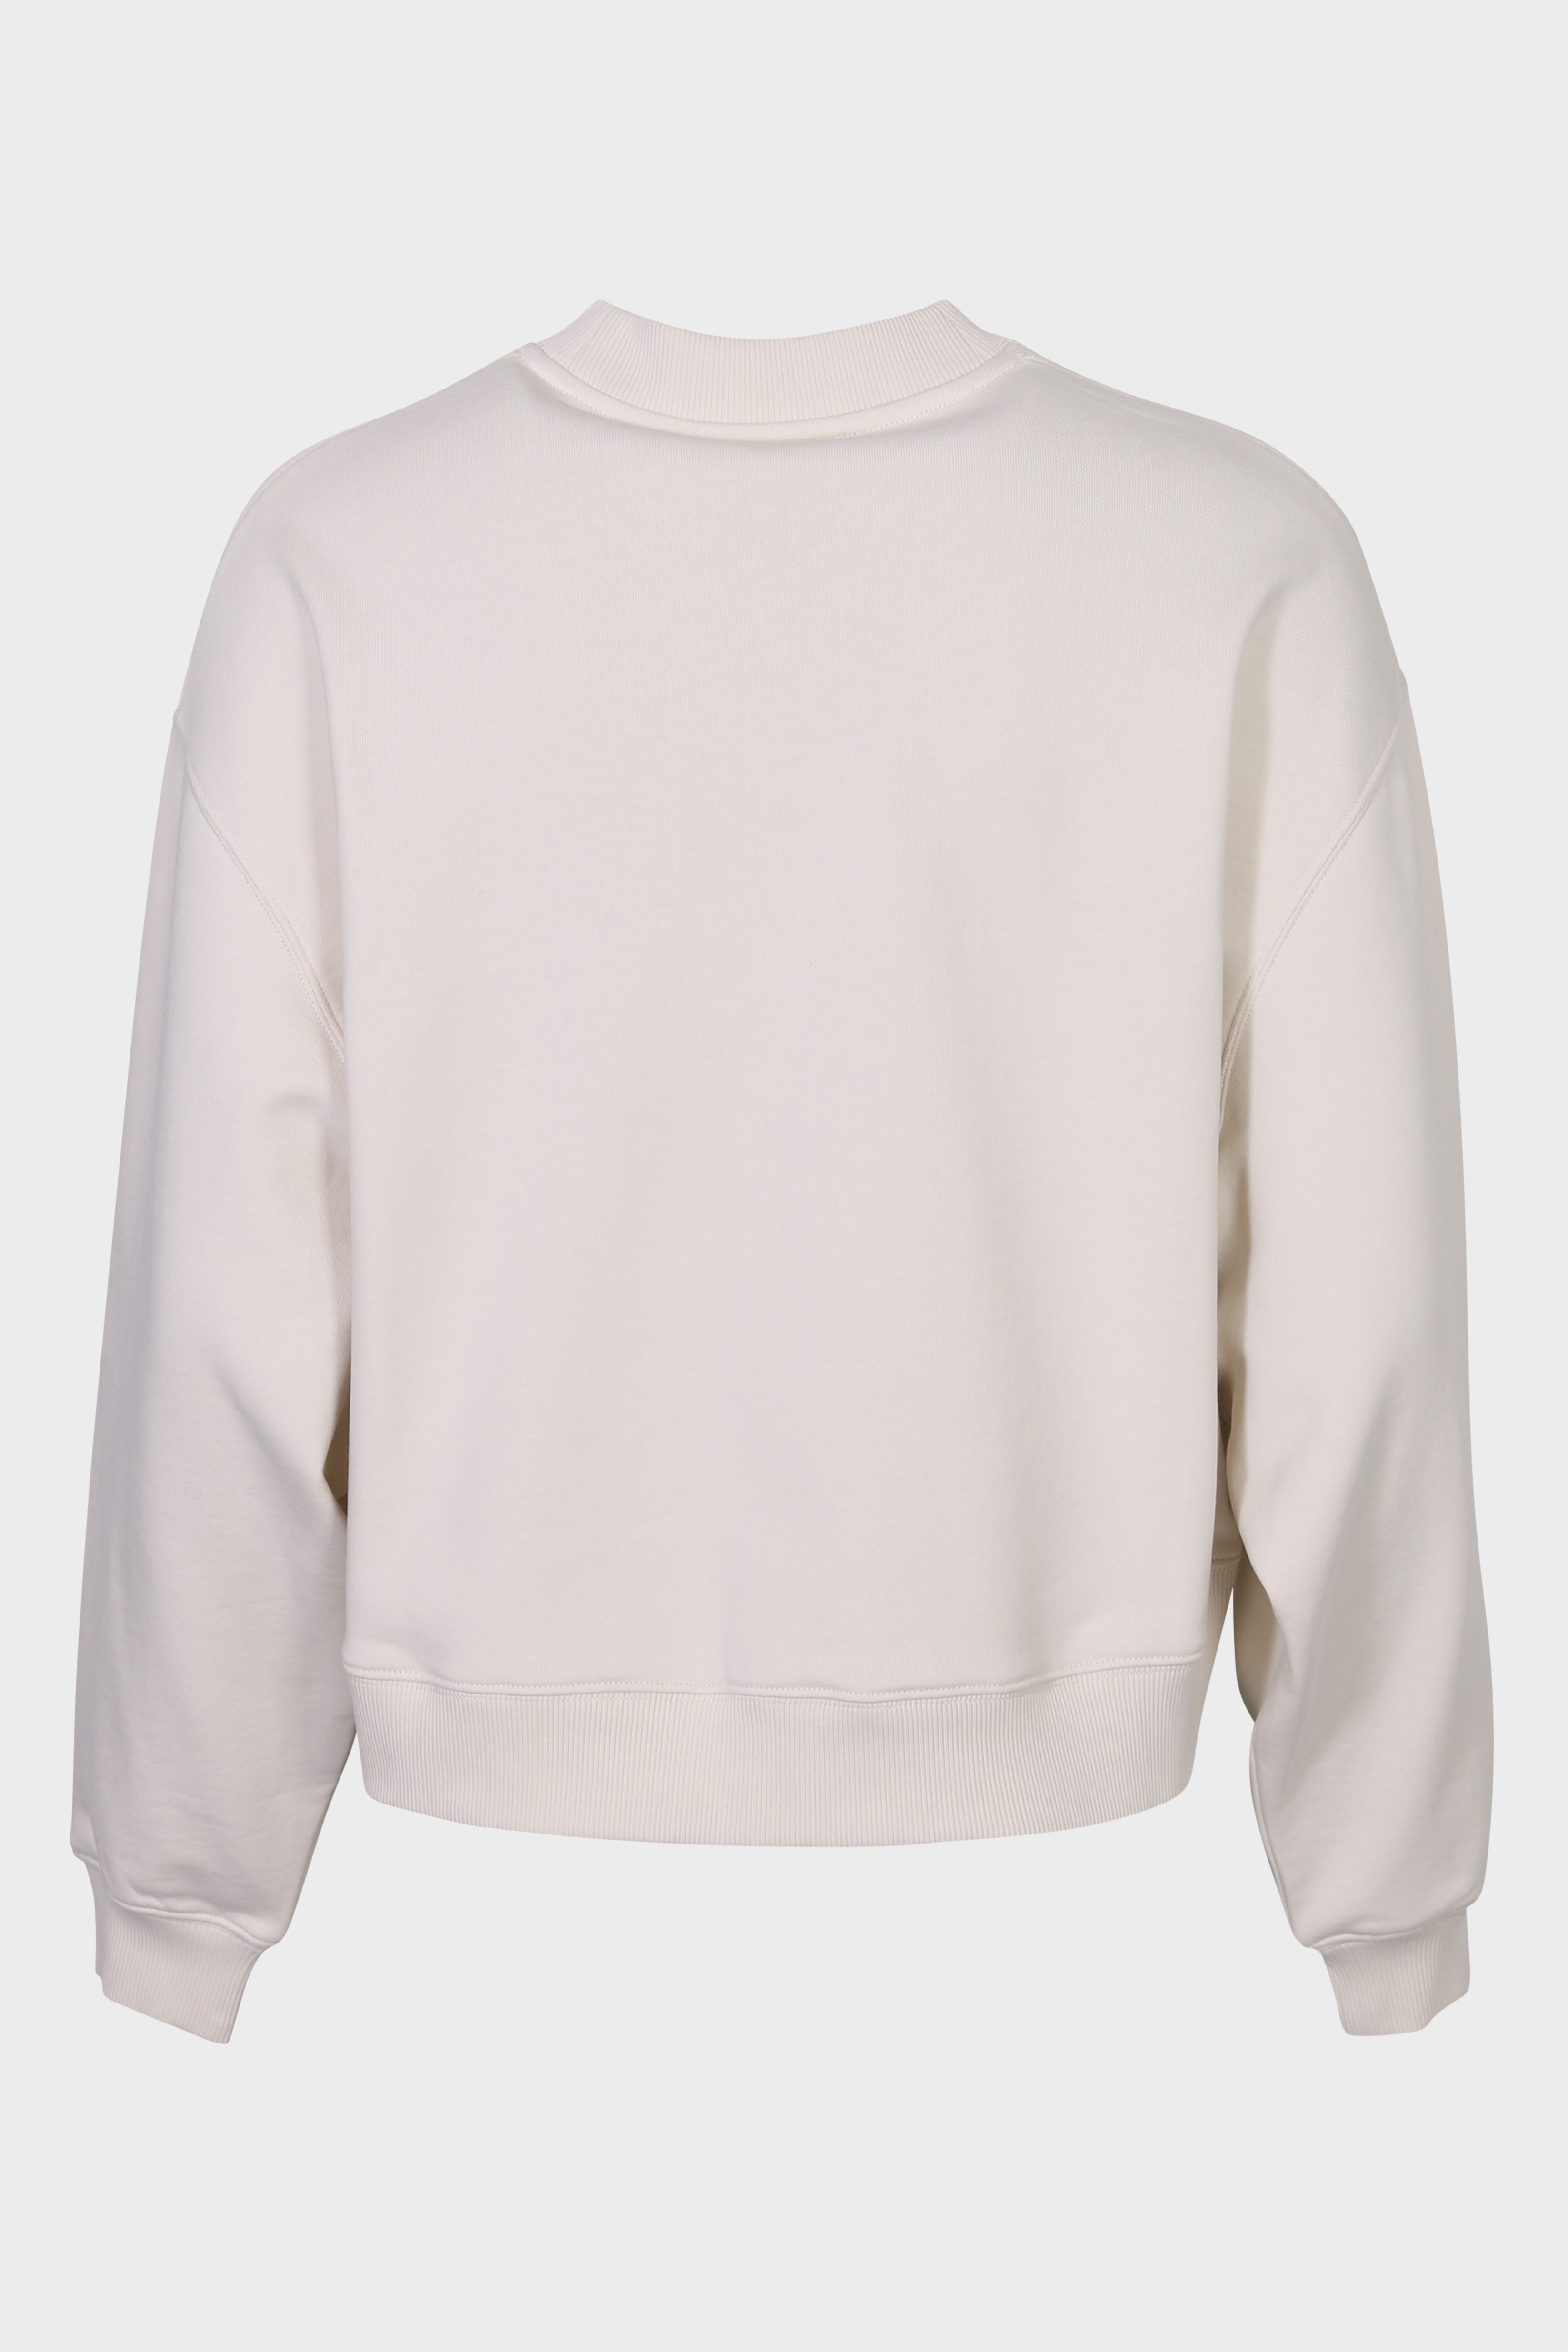 AXEL ARIGATO Legacy Sweatshirt in Off White L